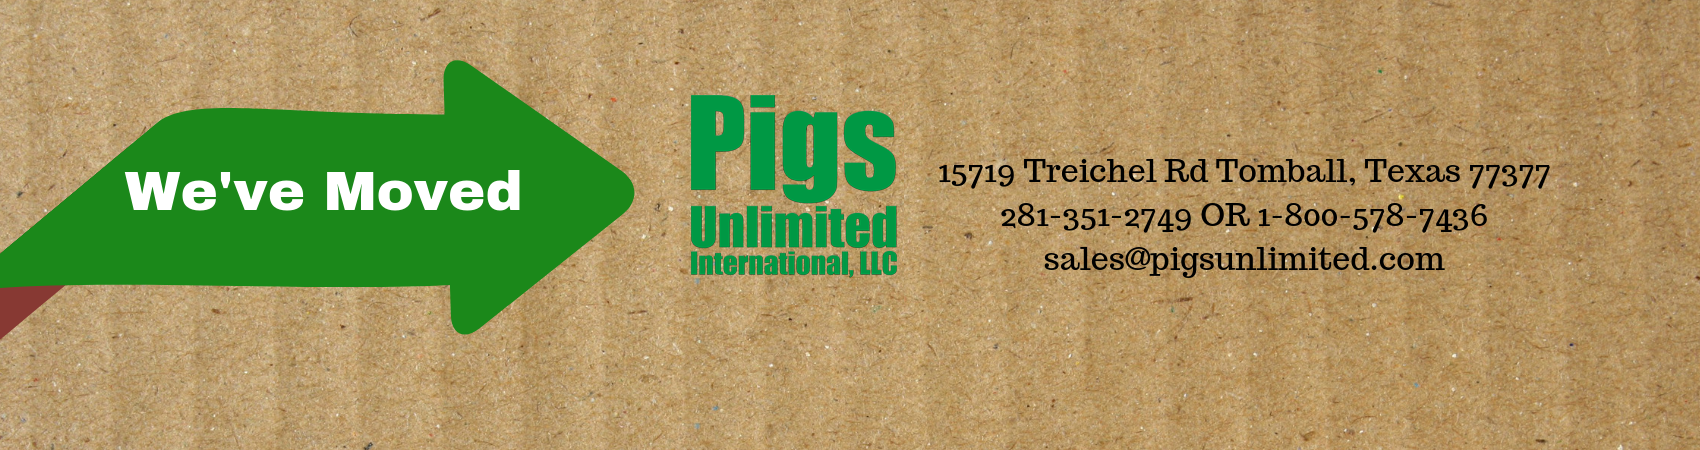 Pigs Unlimited Slider Image